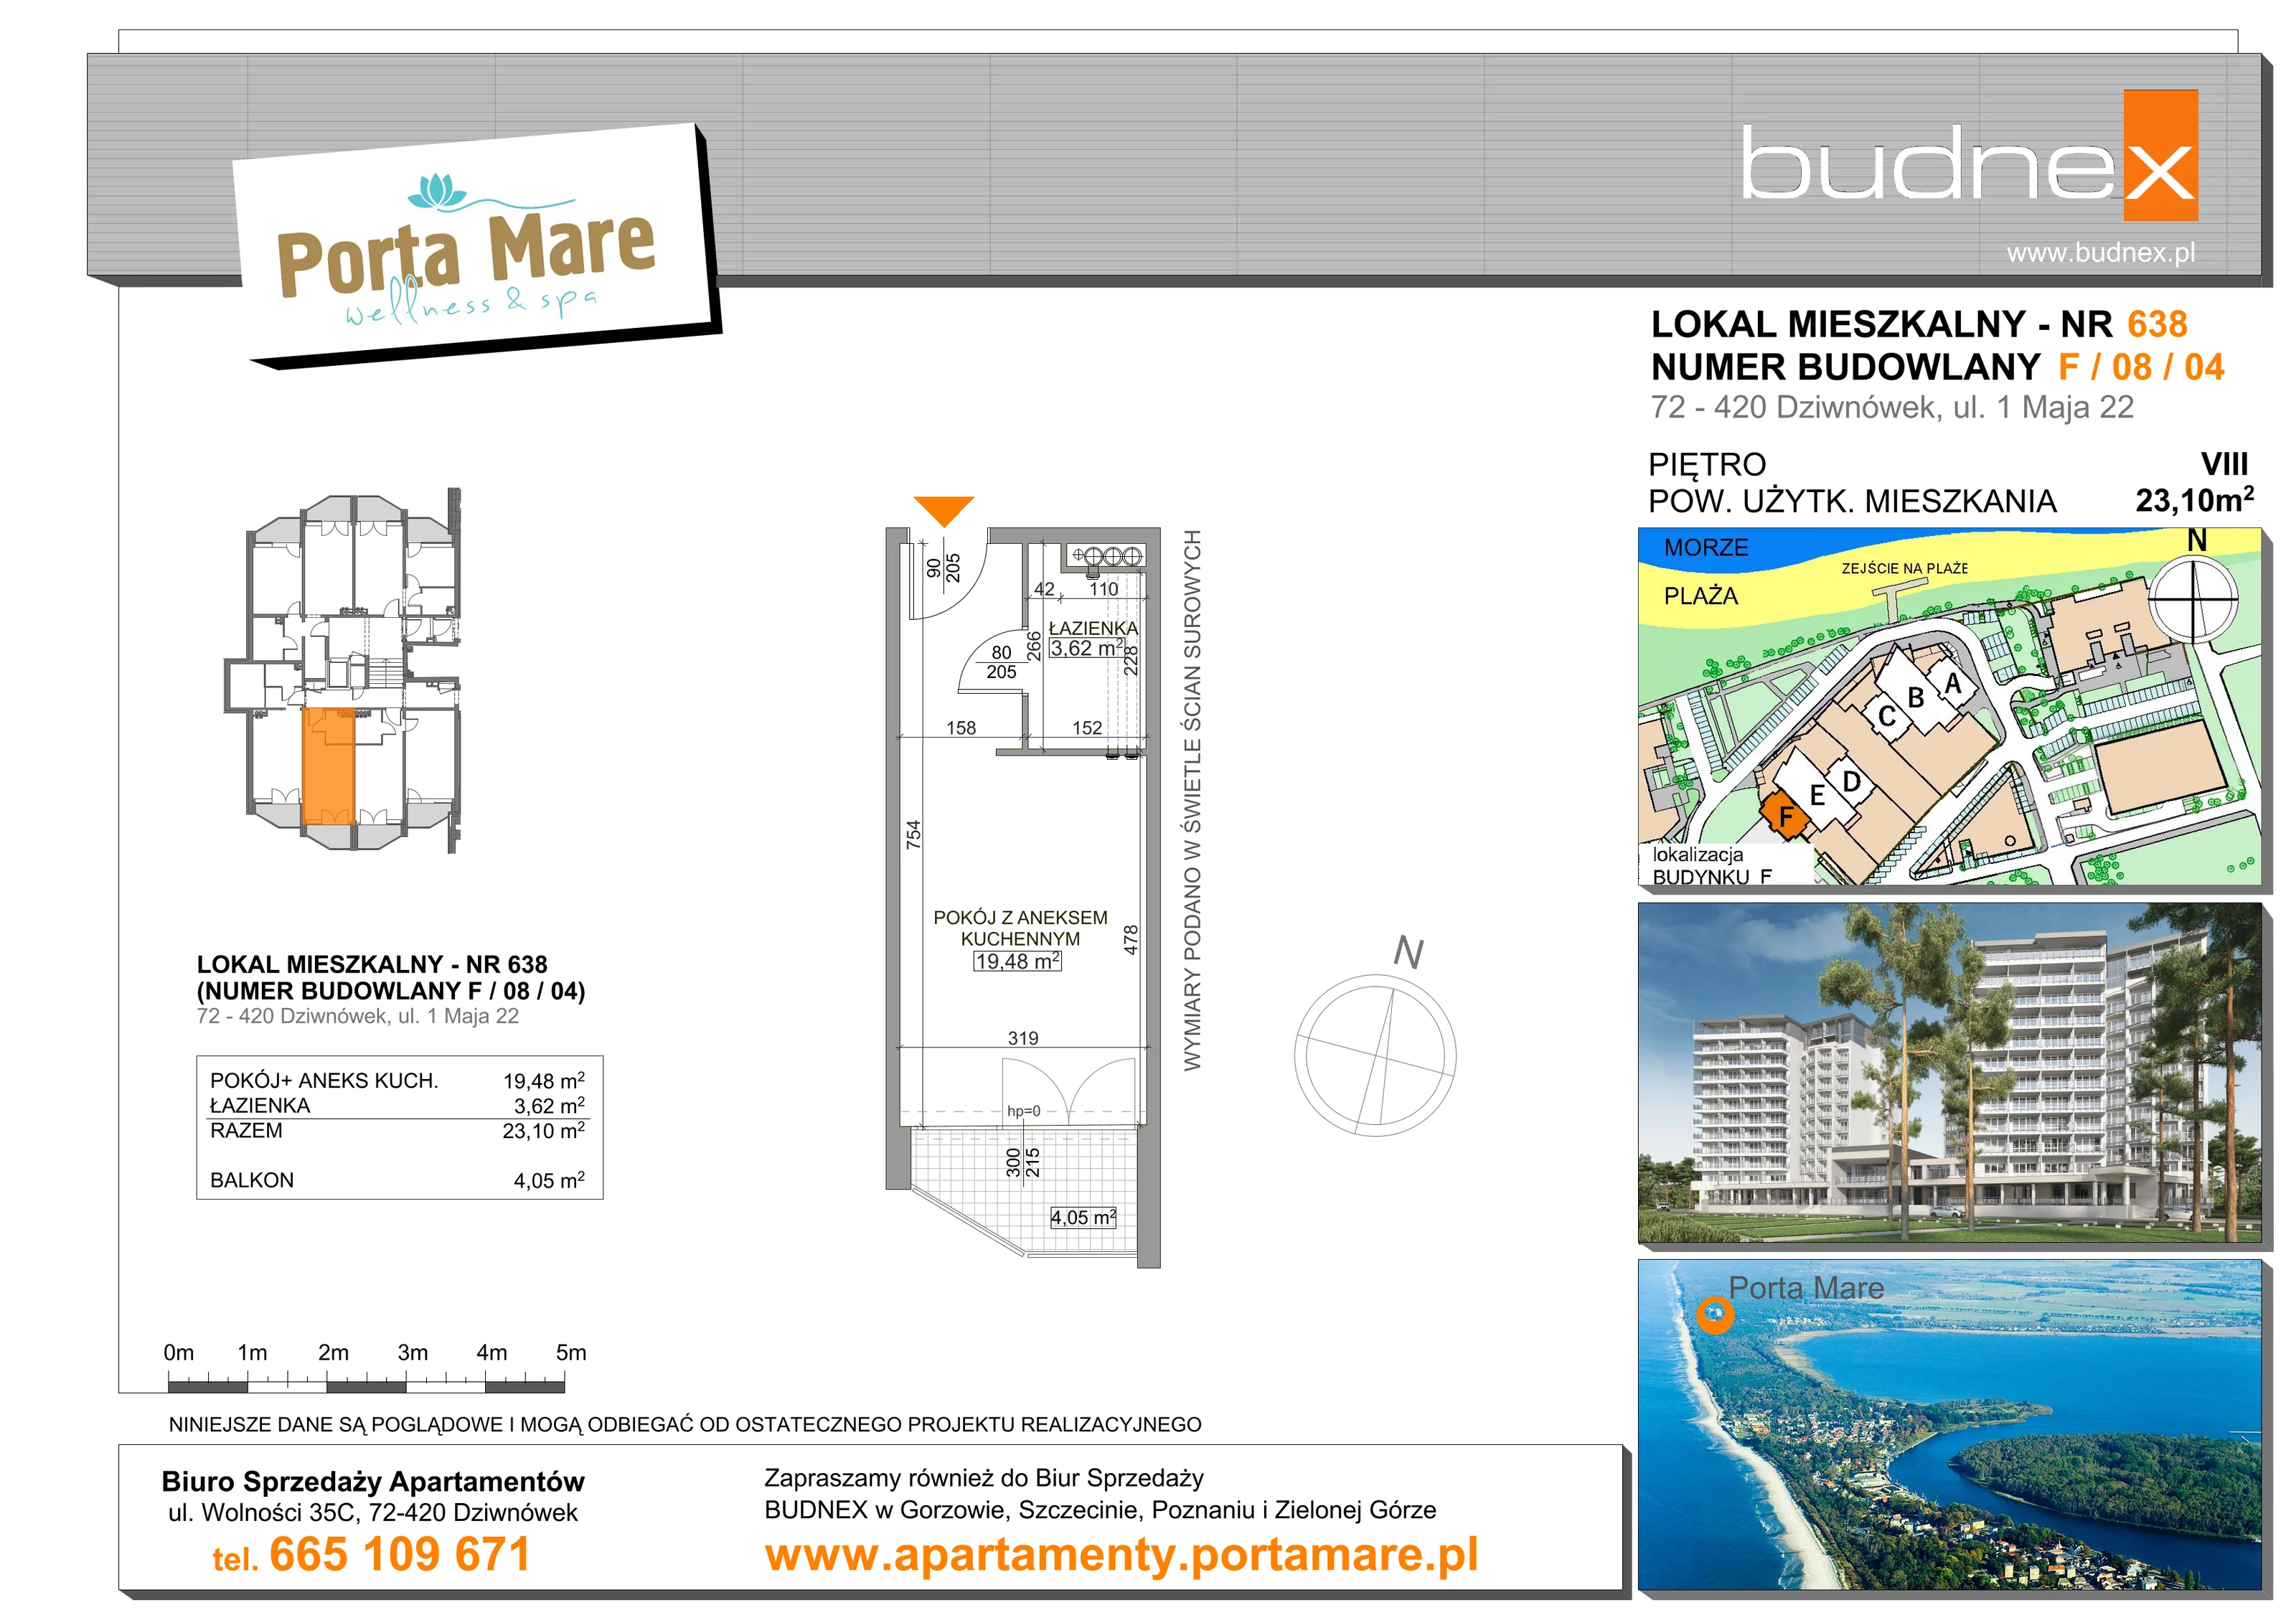 Apartament 23,10 m², piętro 8, oferta nr 638, Porta Mare Wellness & Spa, Dziwnówek, ul. Wolności